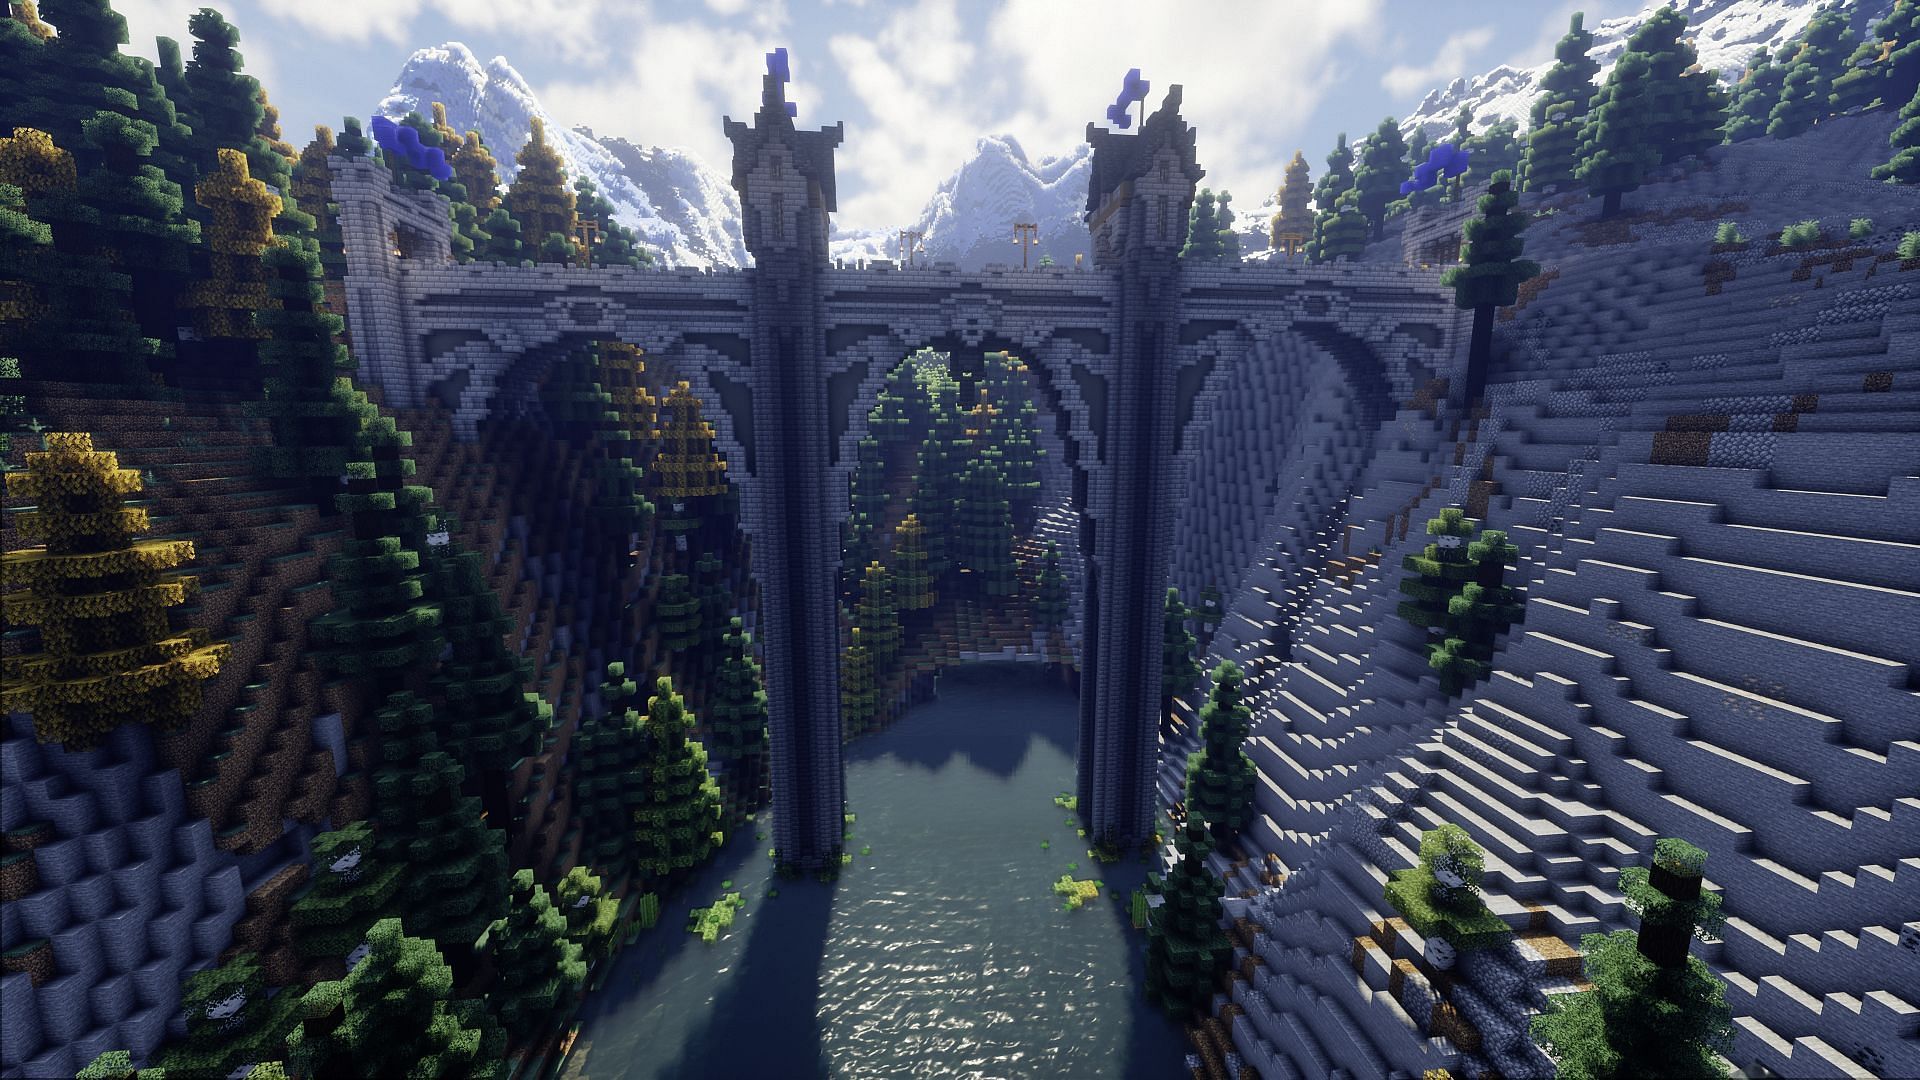 A bridge made of stone archways (Image via PinkFloydSheep/Reddit)